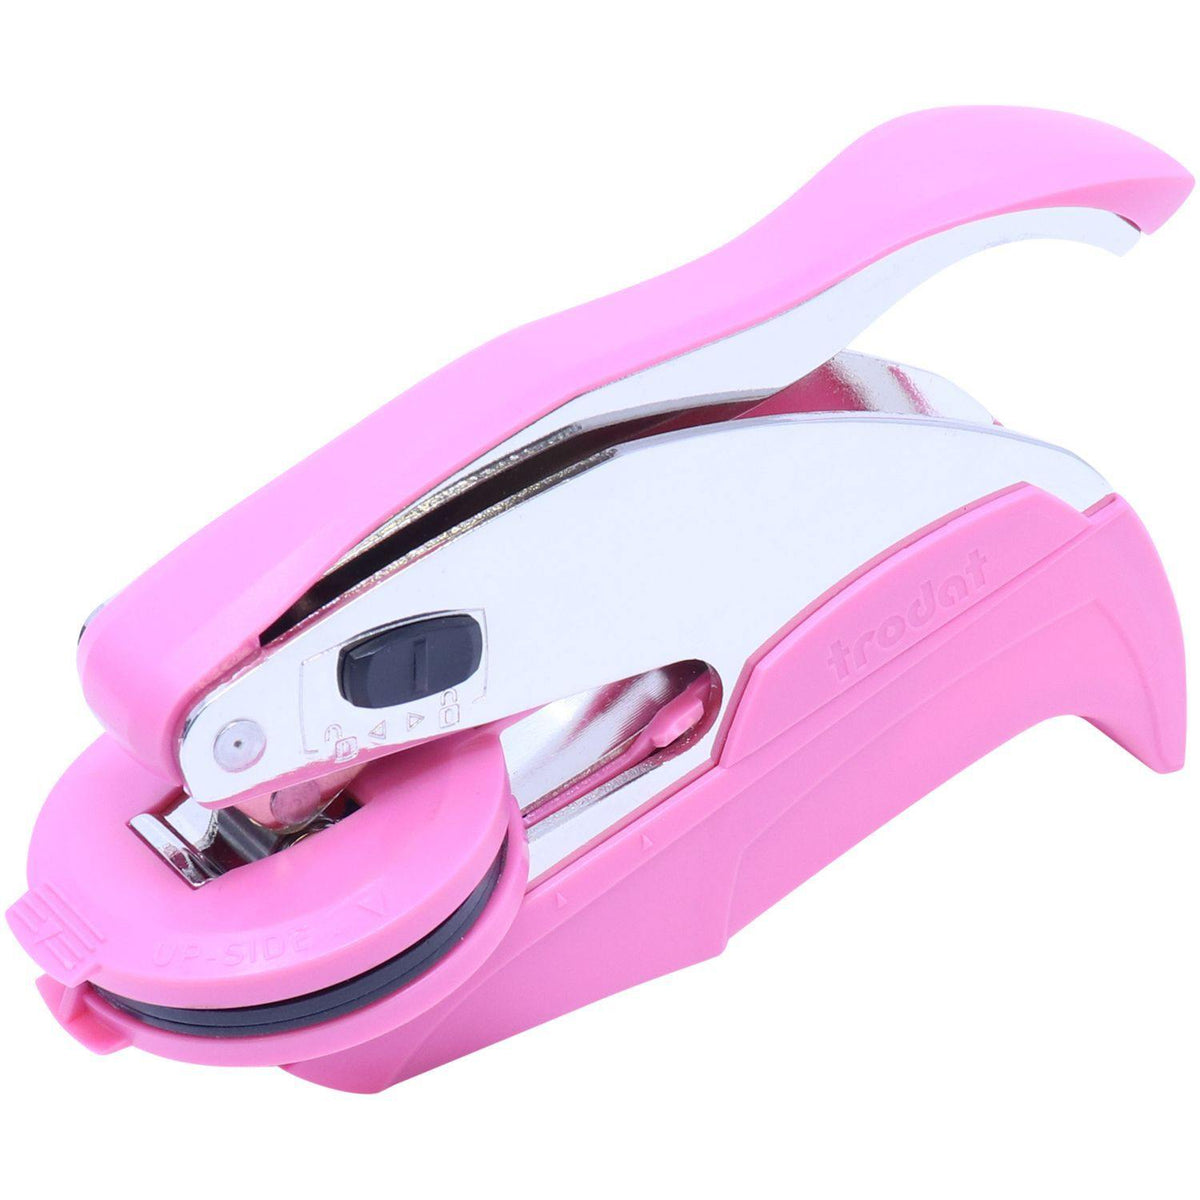 Forester Pink Hybrid Handheld Embosser - Engineer Seal Stamps - Embosser Type_Handheld, Embosser Type_Hybrid, Type of Use_Professional